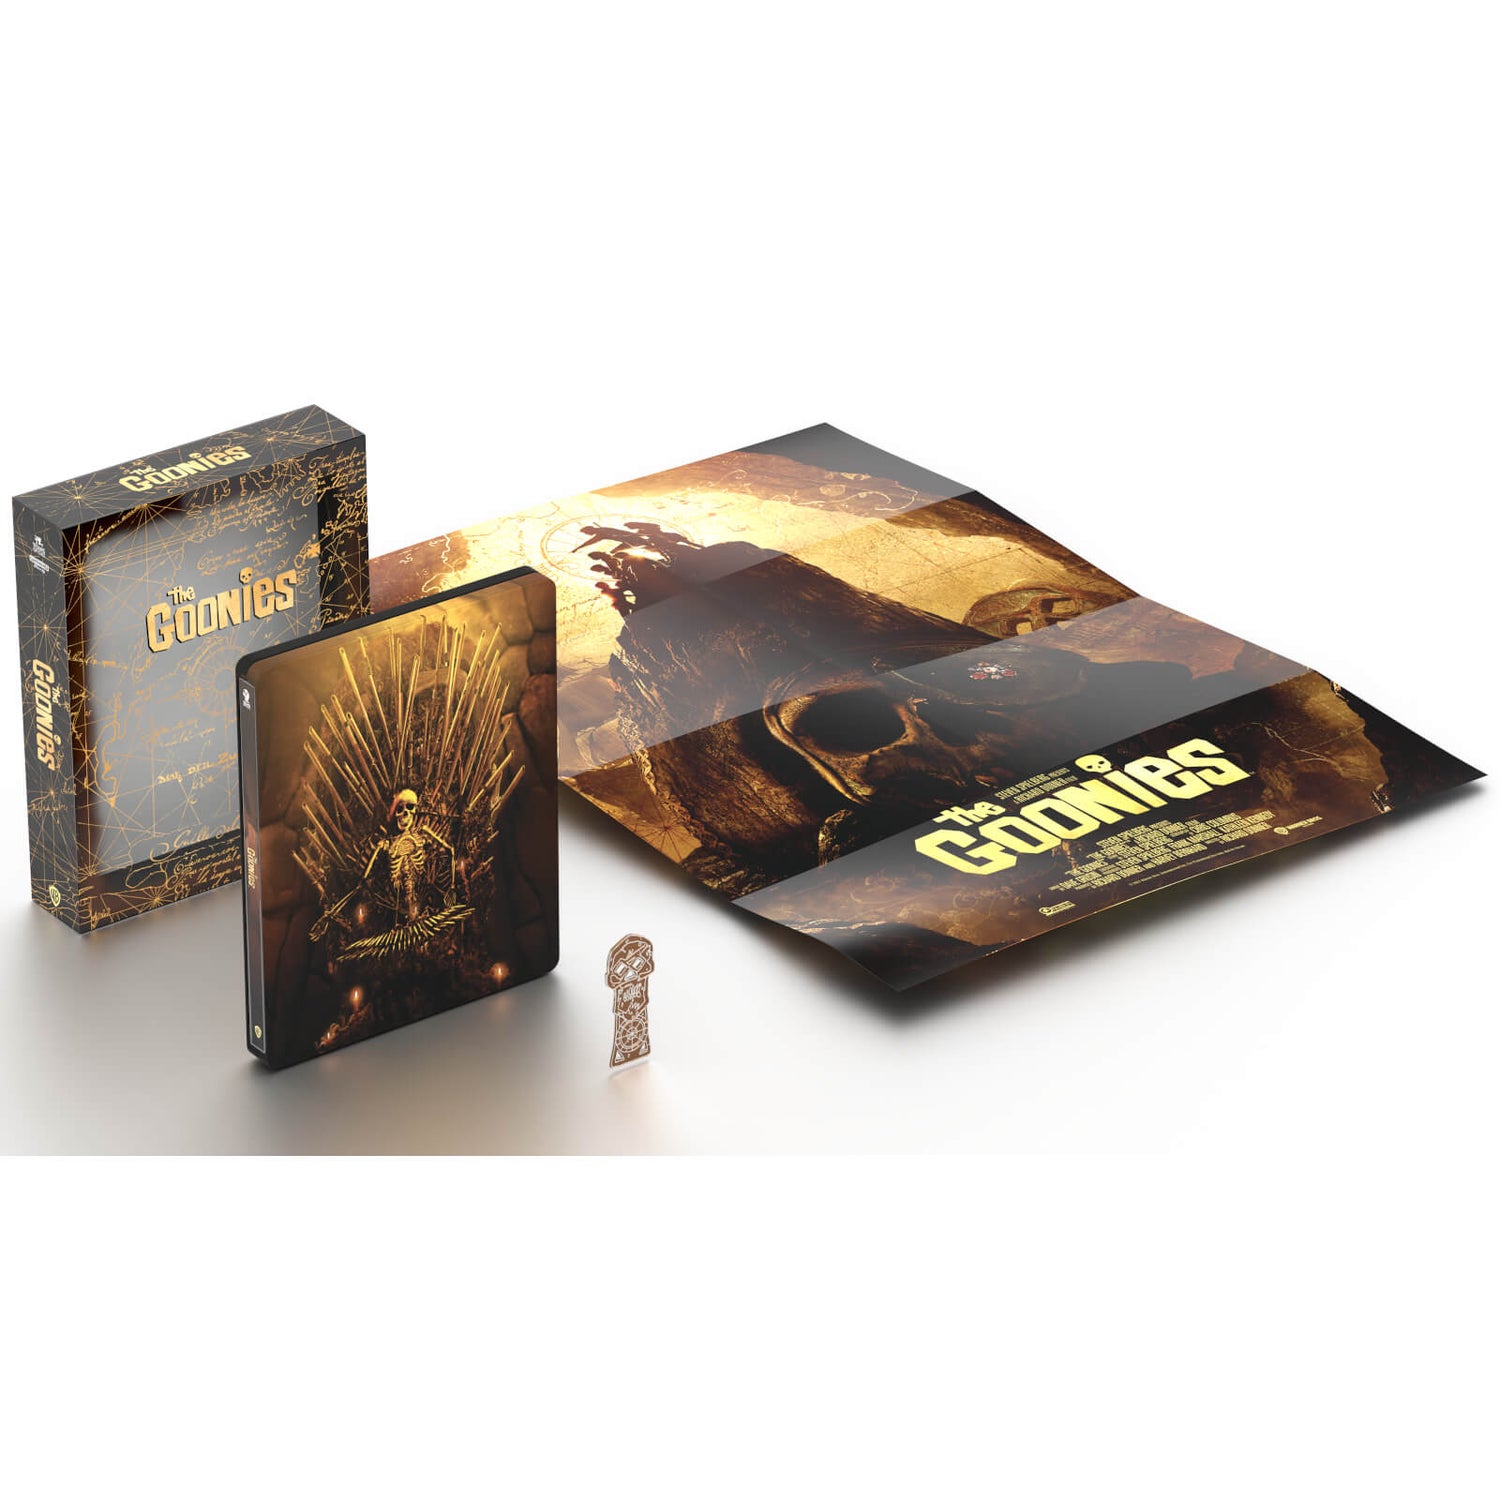 Les Goonies - Steelbook 4K Ultra HD Édition Limitée Titans of Cult (Blu-ray inclus)